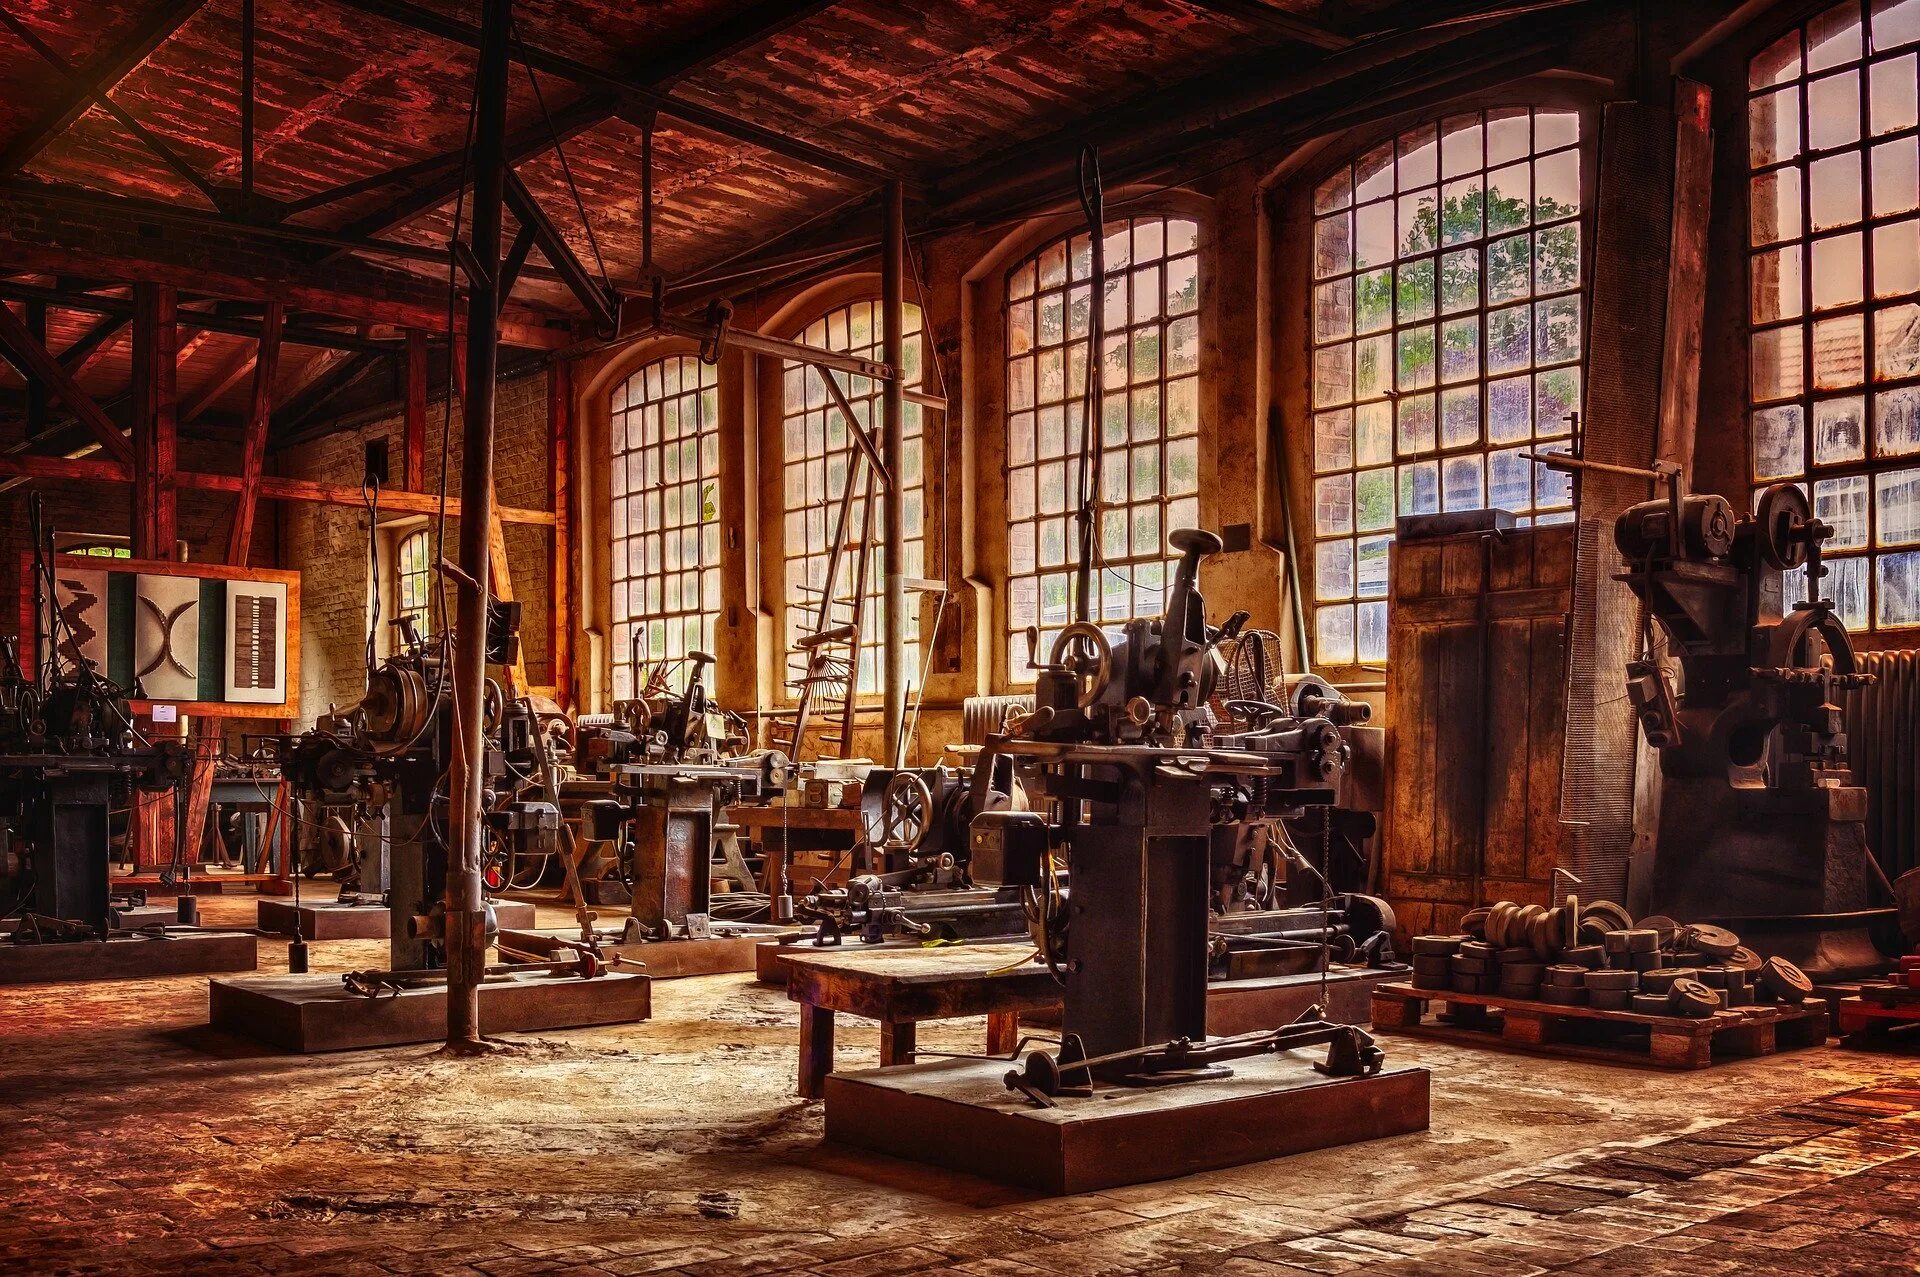 Франция металлургическая мануфактура 17 век. Фабрика 18 век Англия. Фабрика 18 века в Англии. Мануфактура и фабрика в Англии 18 век. Фабрика 18 века